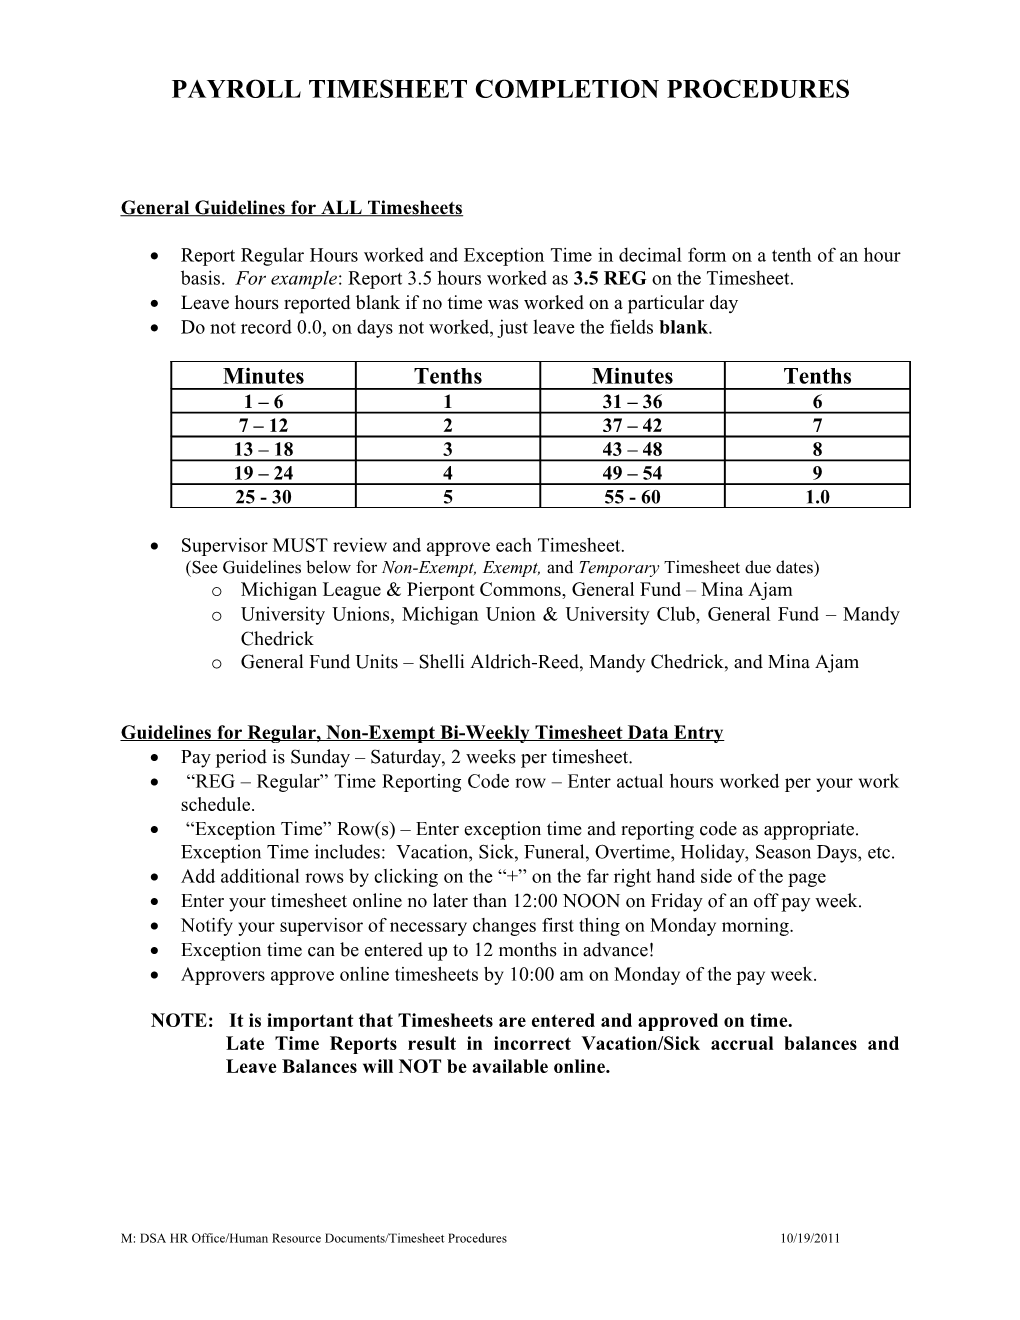 Timesheet Completion Procedures